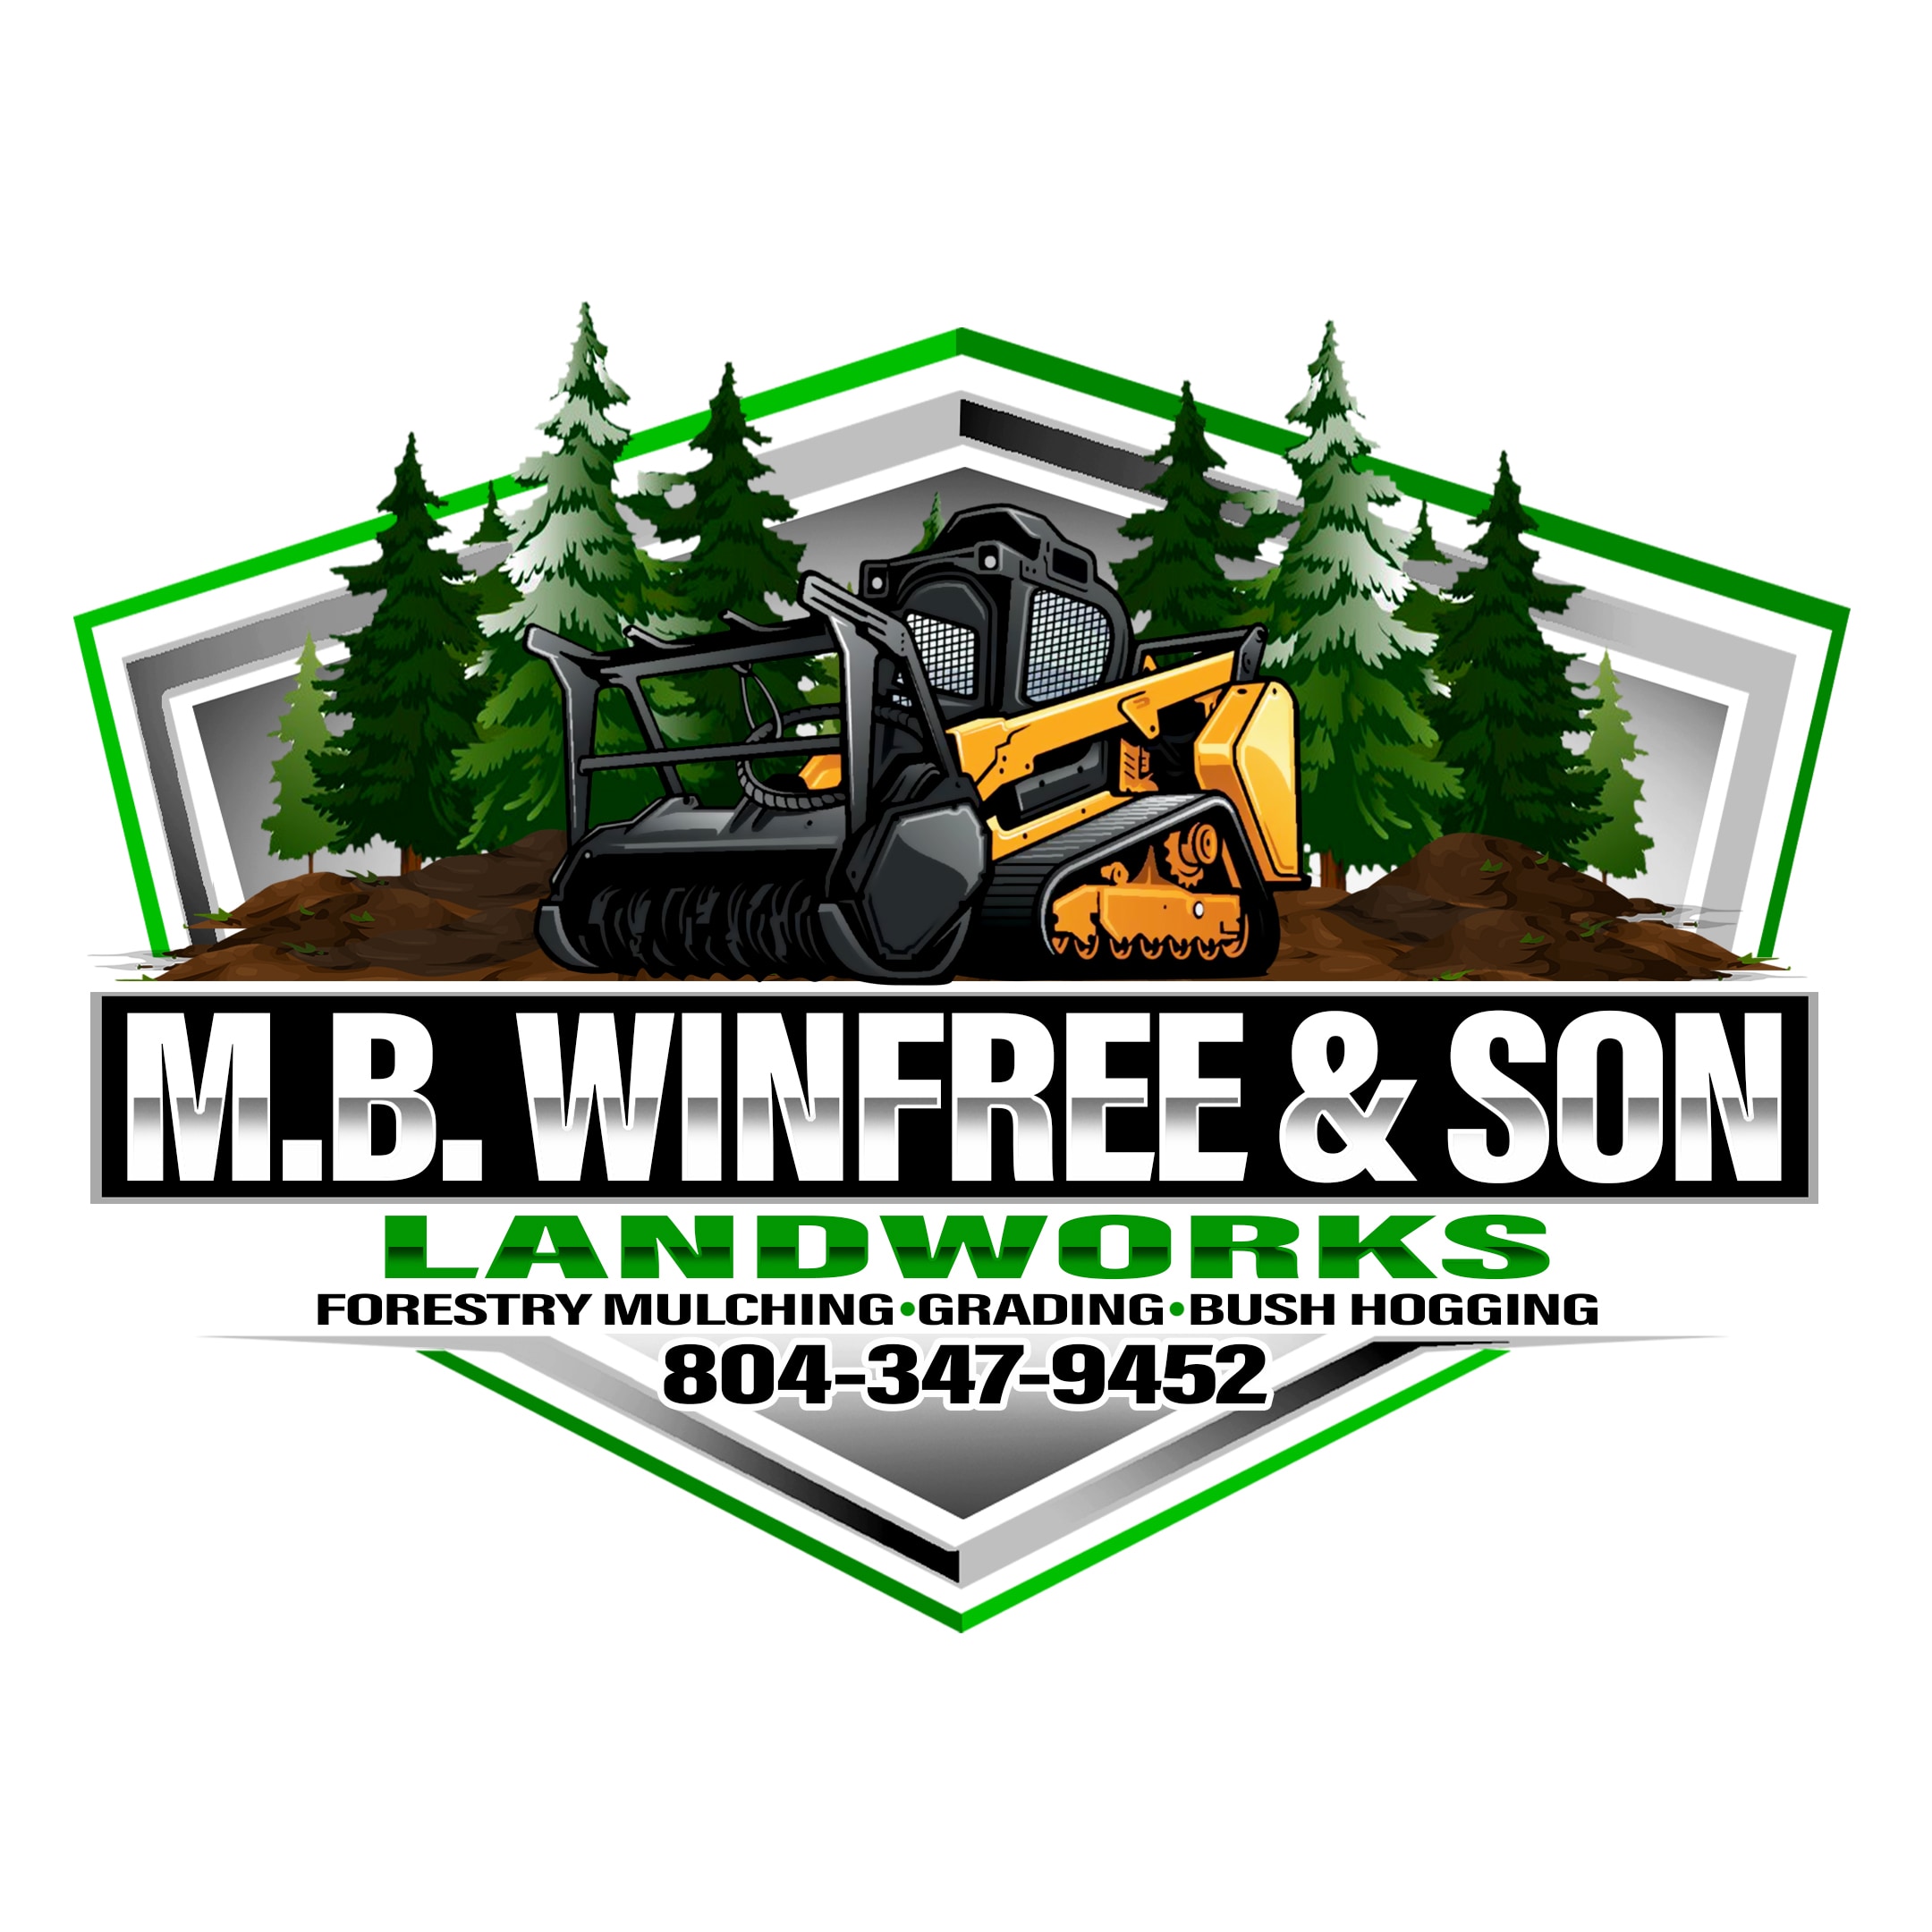 M.B. Winfree & Son Landworks Logo